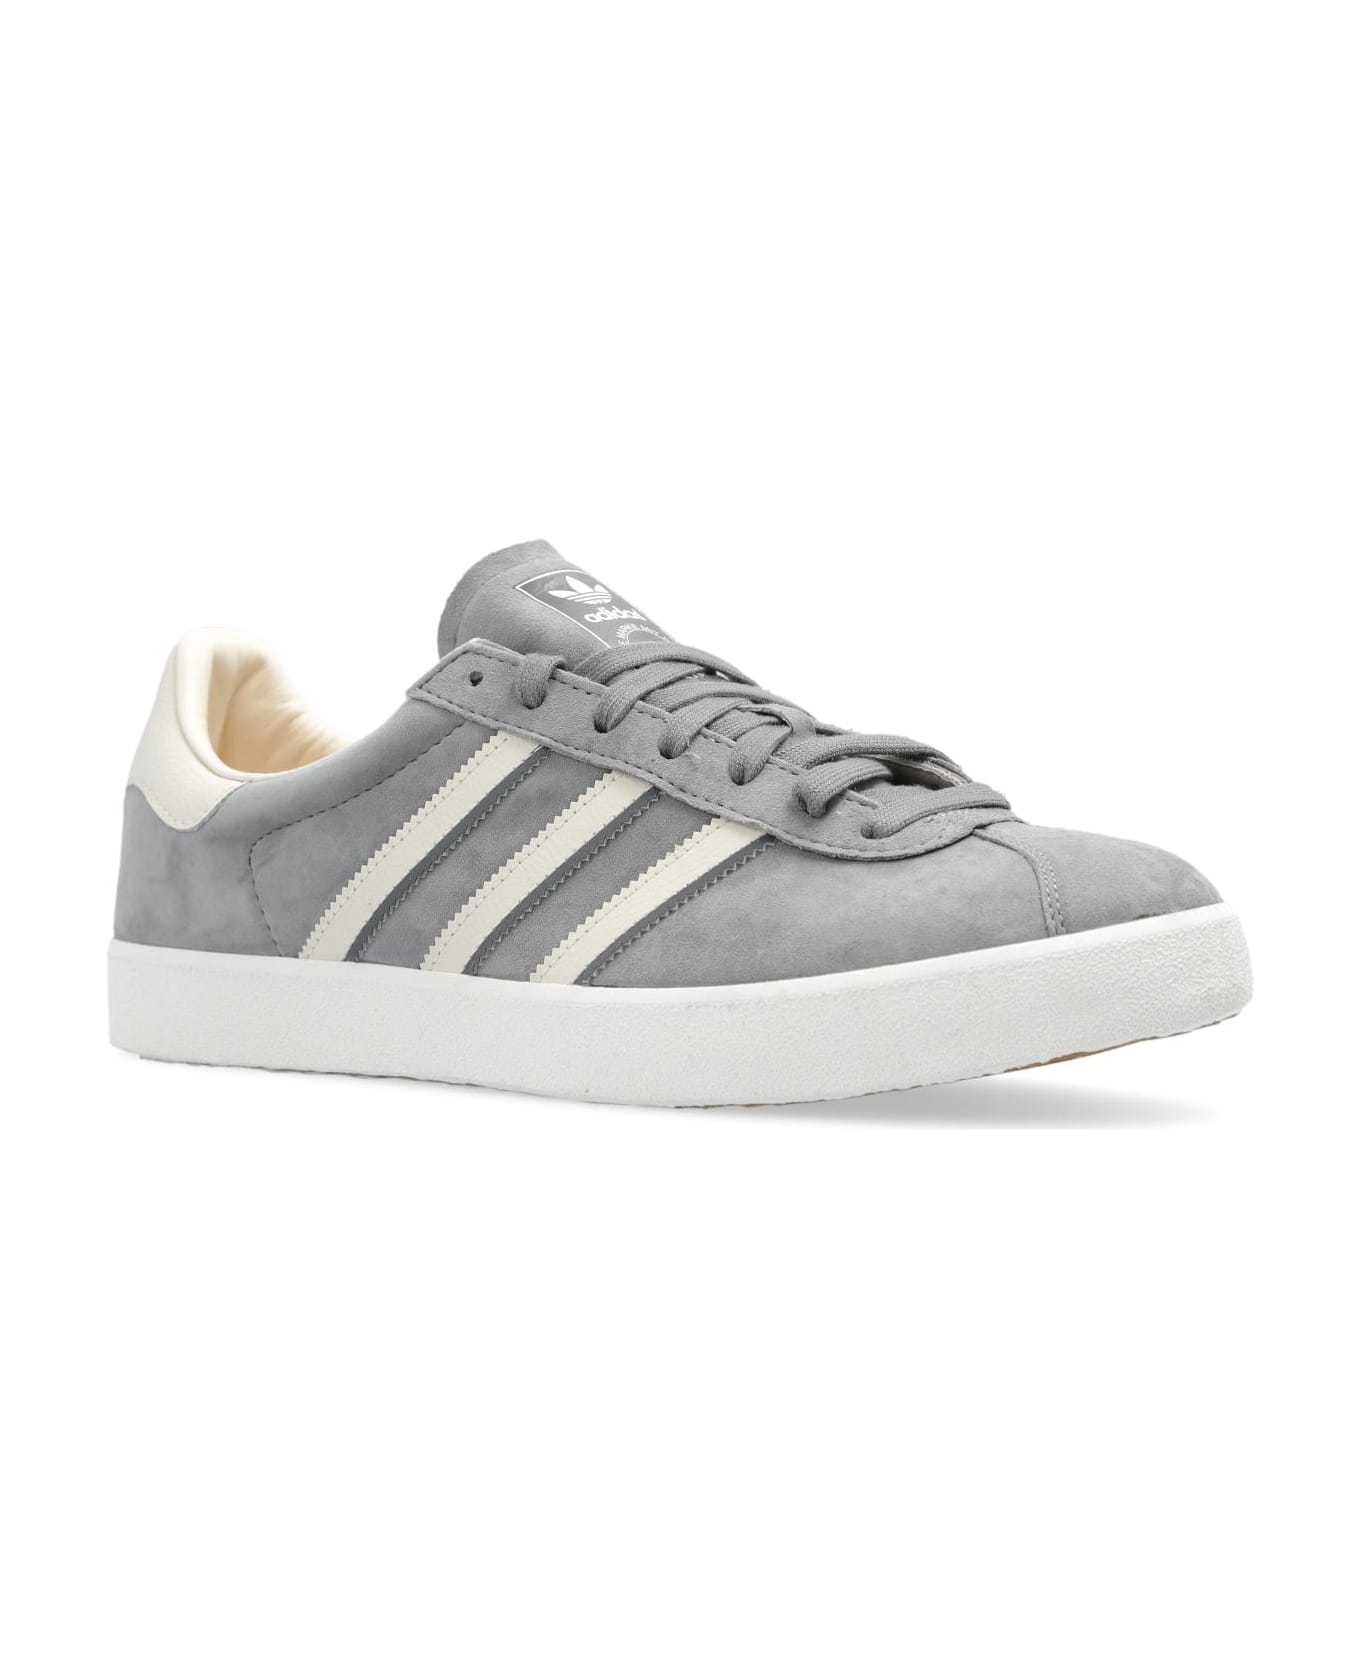 Adidas Originals 'gazelle 85' Sneakers - Grey スニーカー